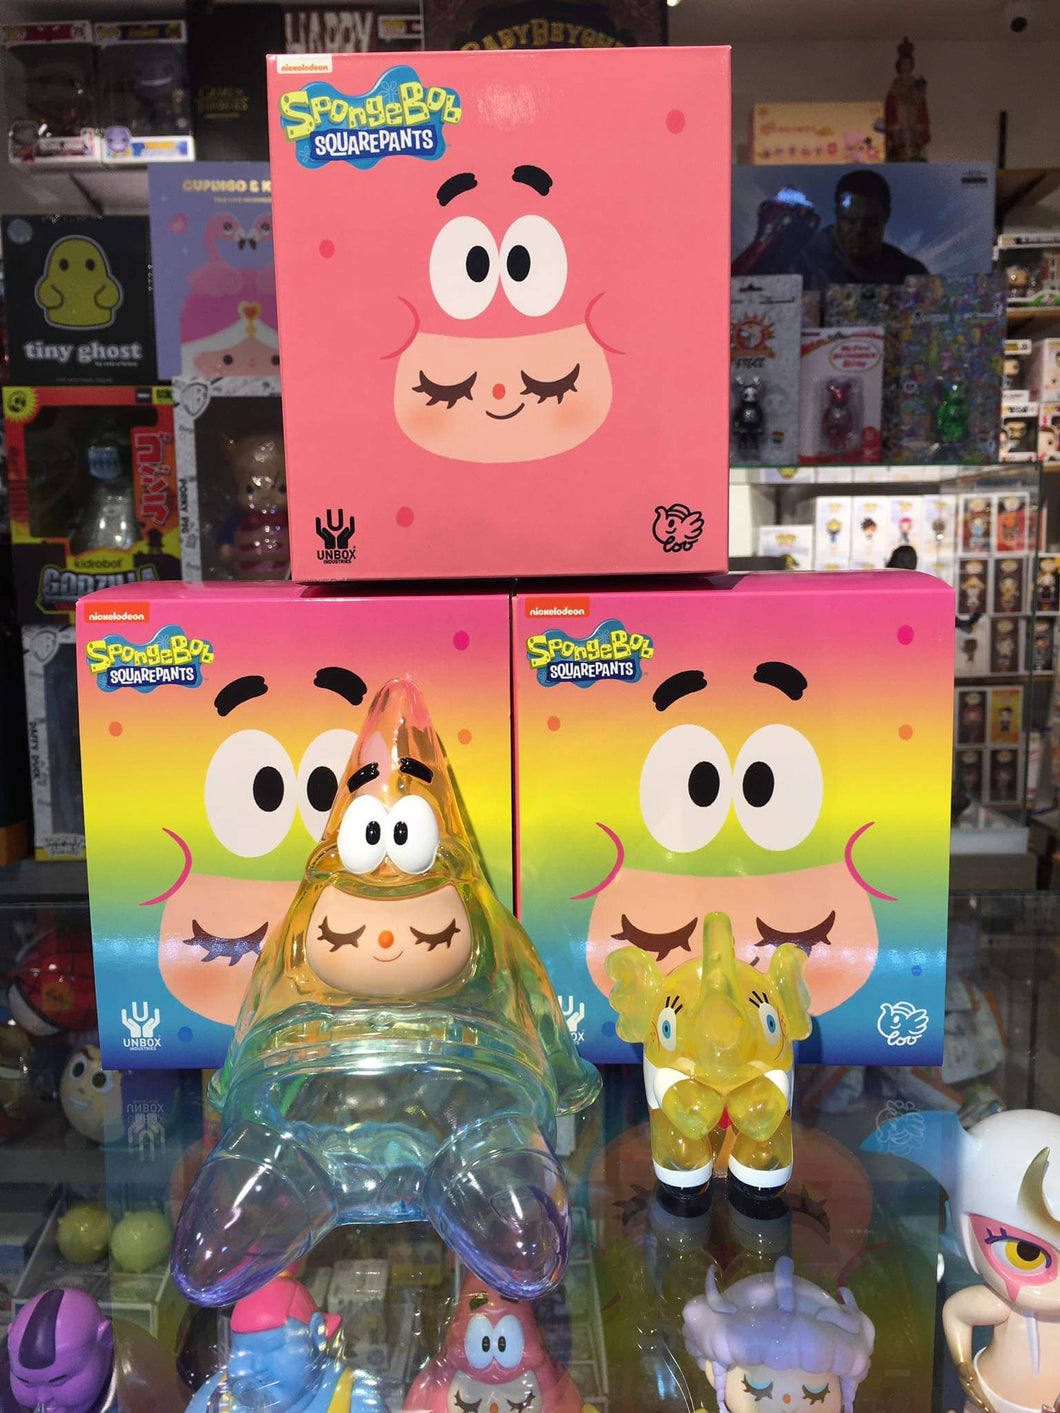 Unbox Industries Spongebob Greenie and Elfie set ( Rainbow Clear Version)